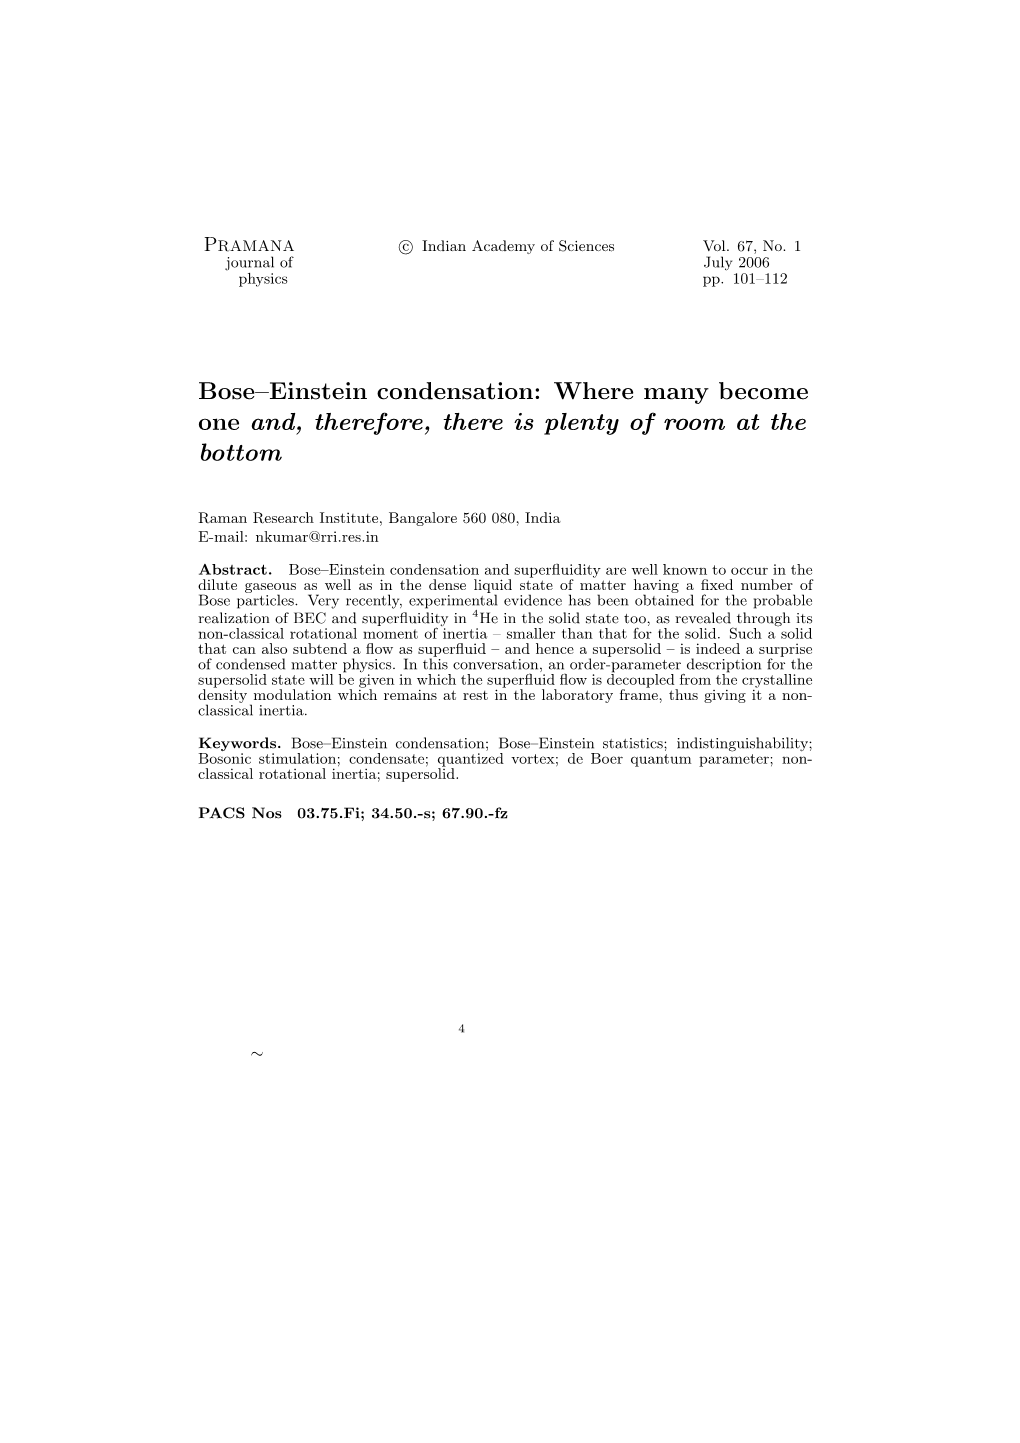 Bose-Einstein Condensation: Where Many Become